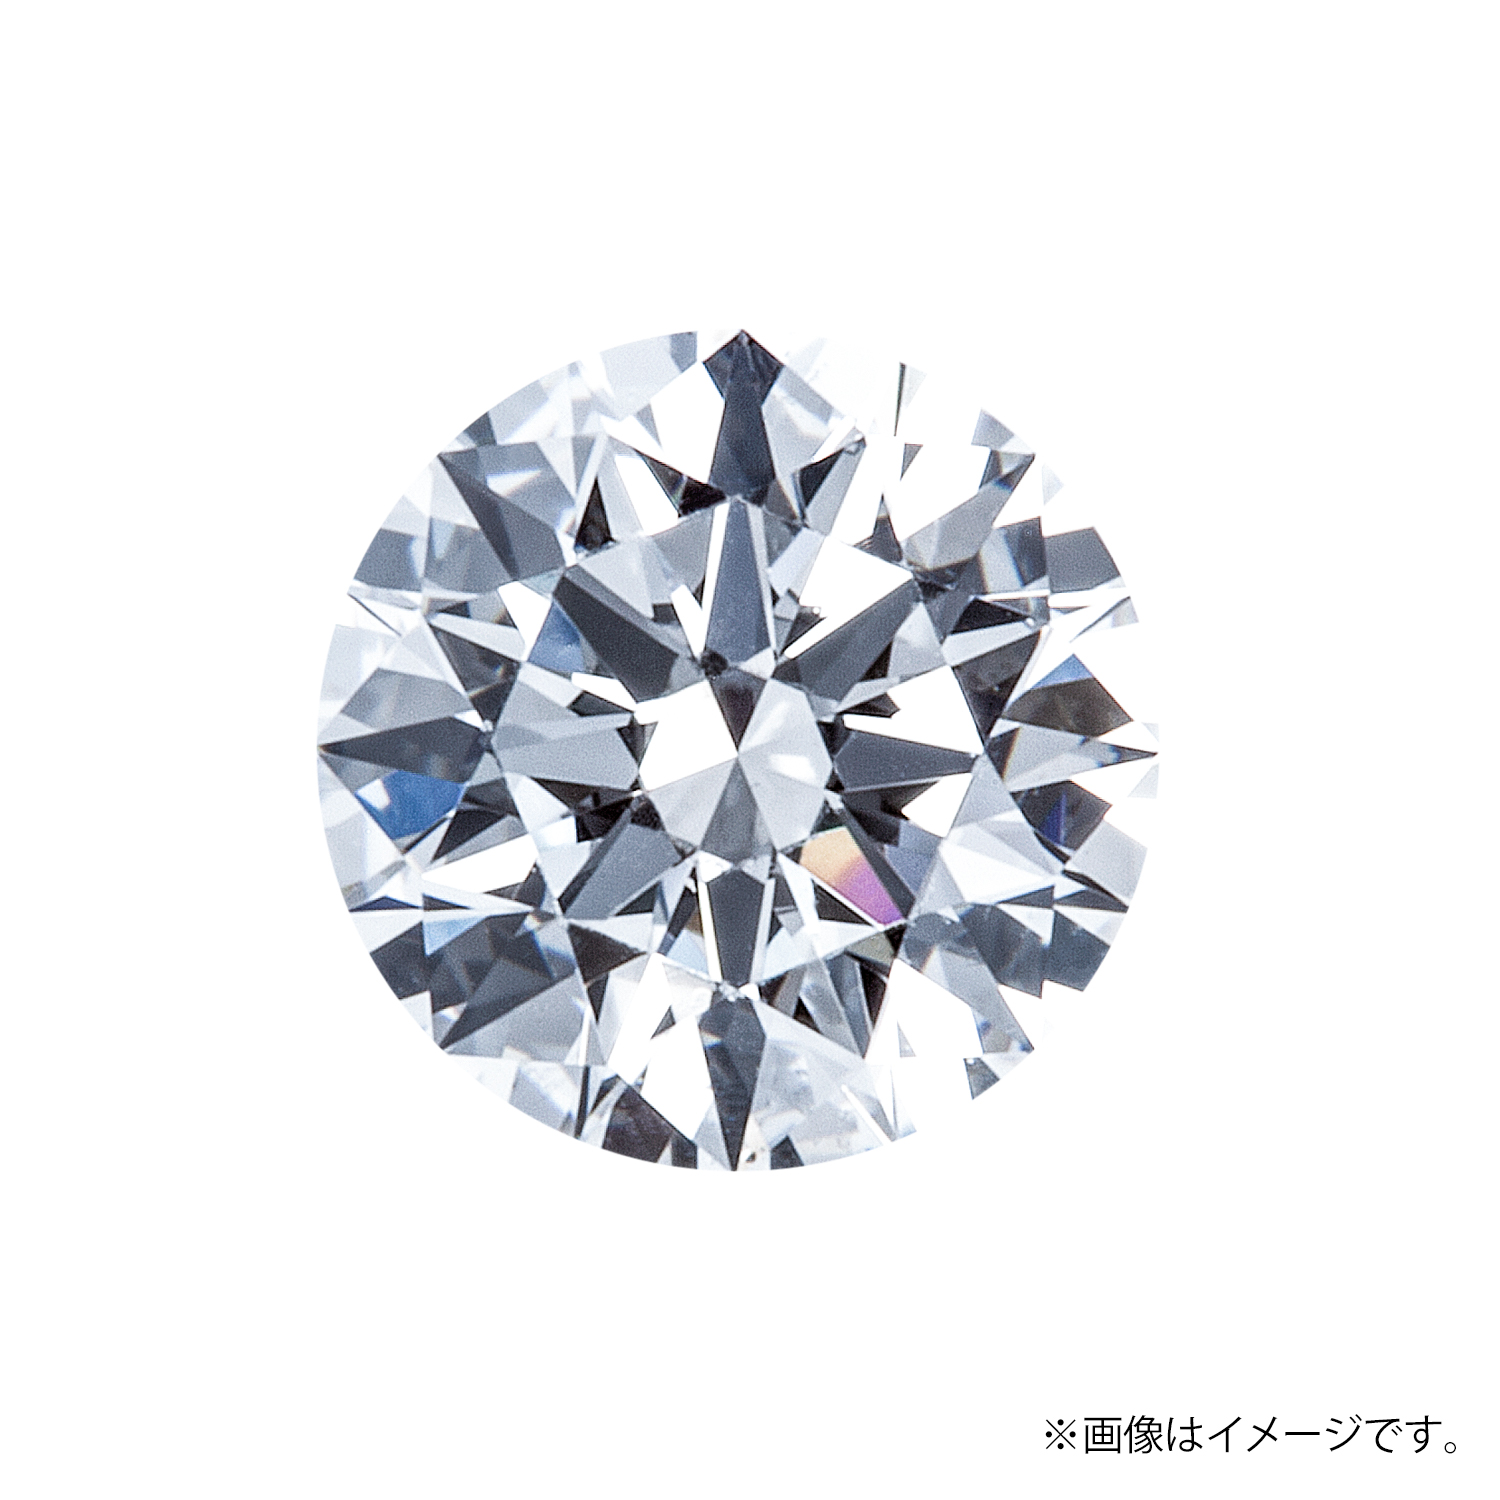 0.243ct Round ダイヤモンド / F / SI1 / ３EX-H&C